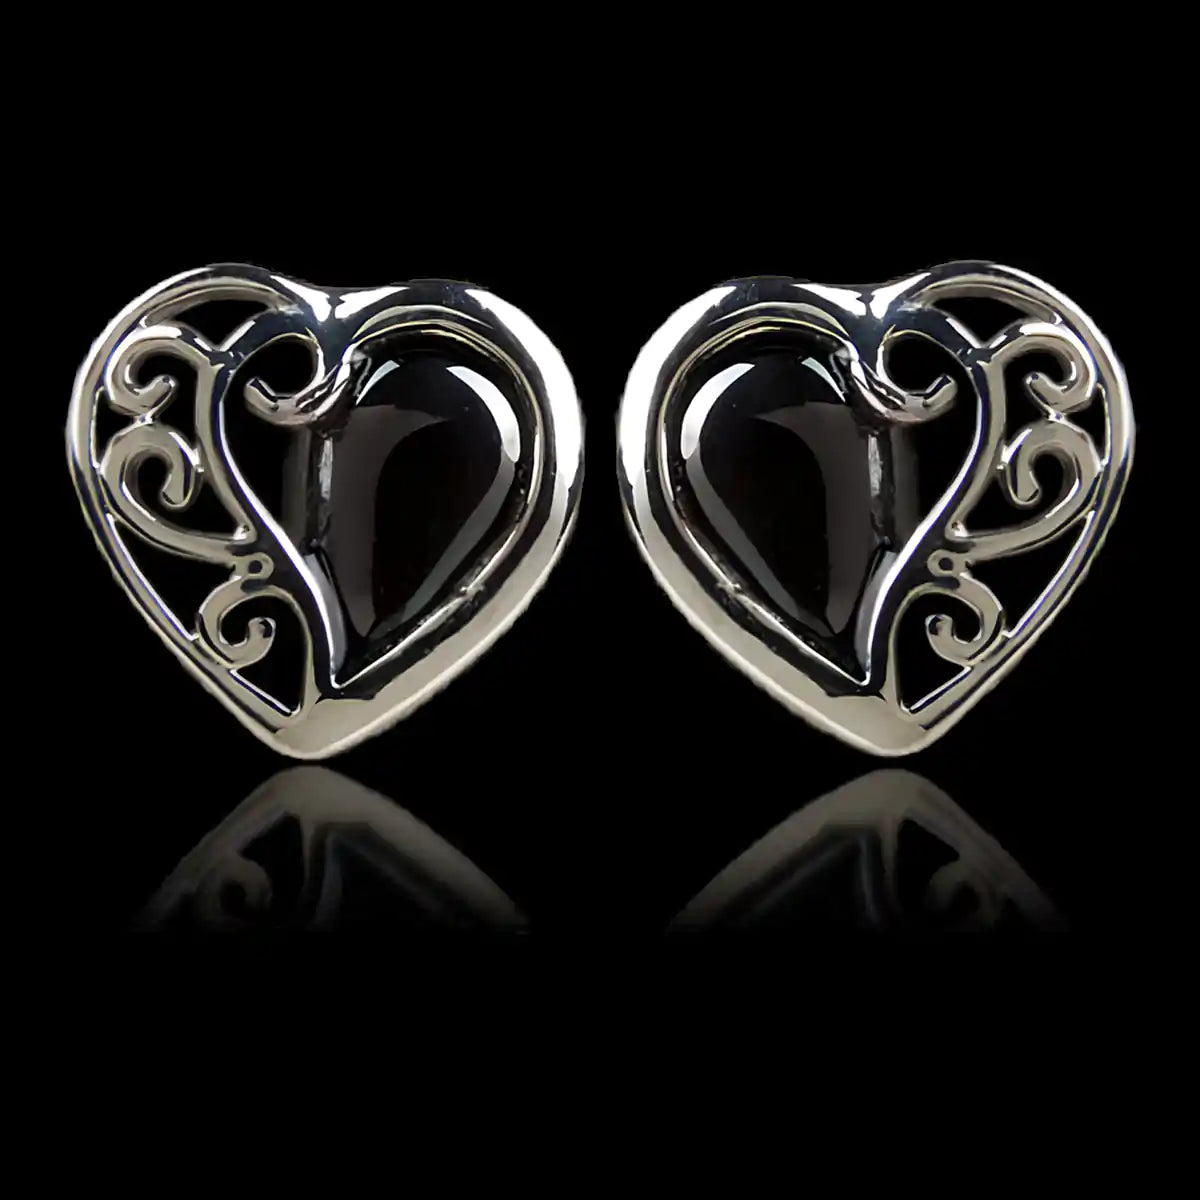 Hematite romance earrings